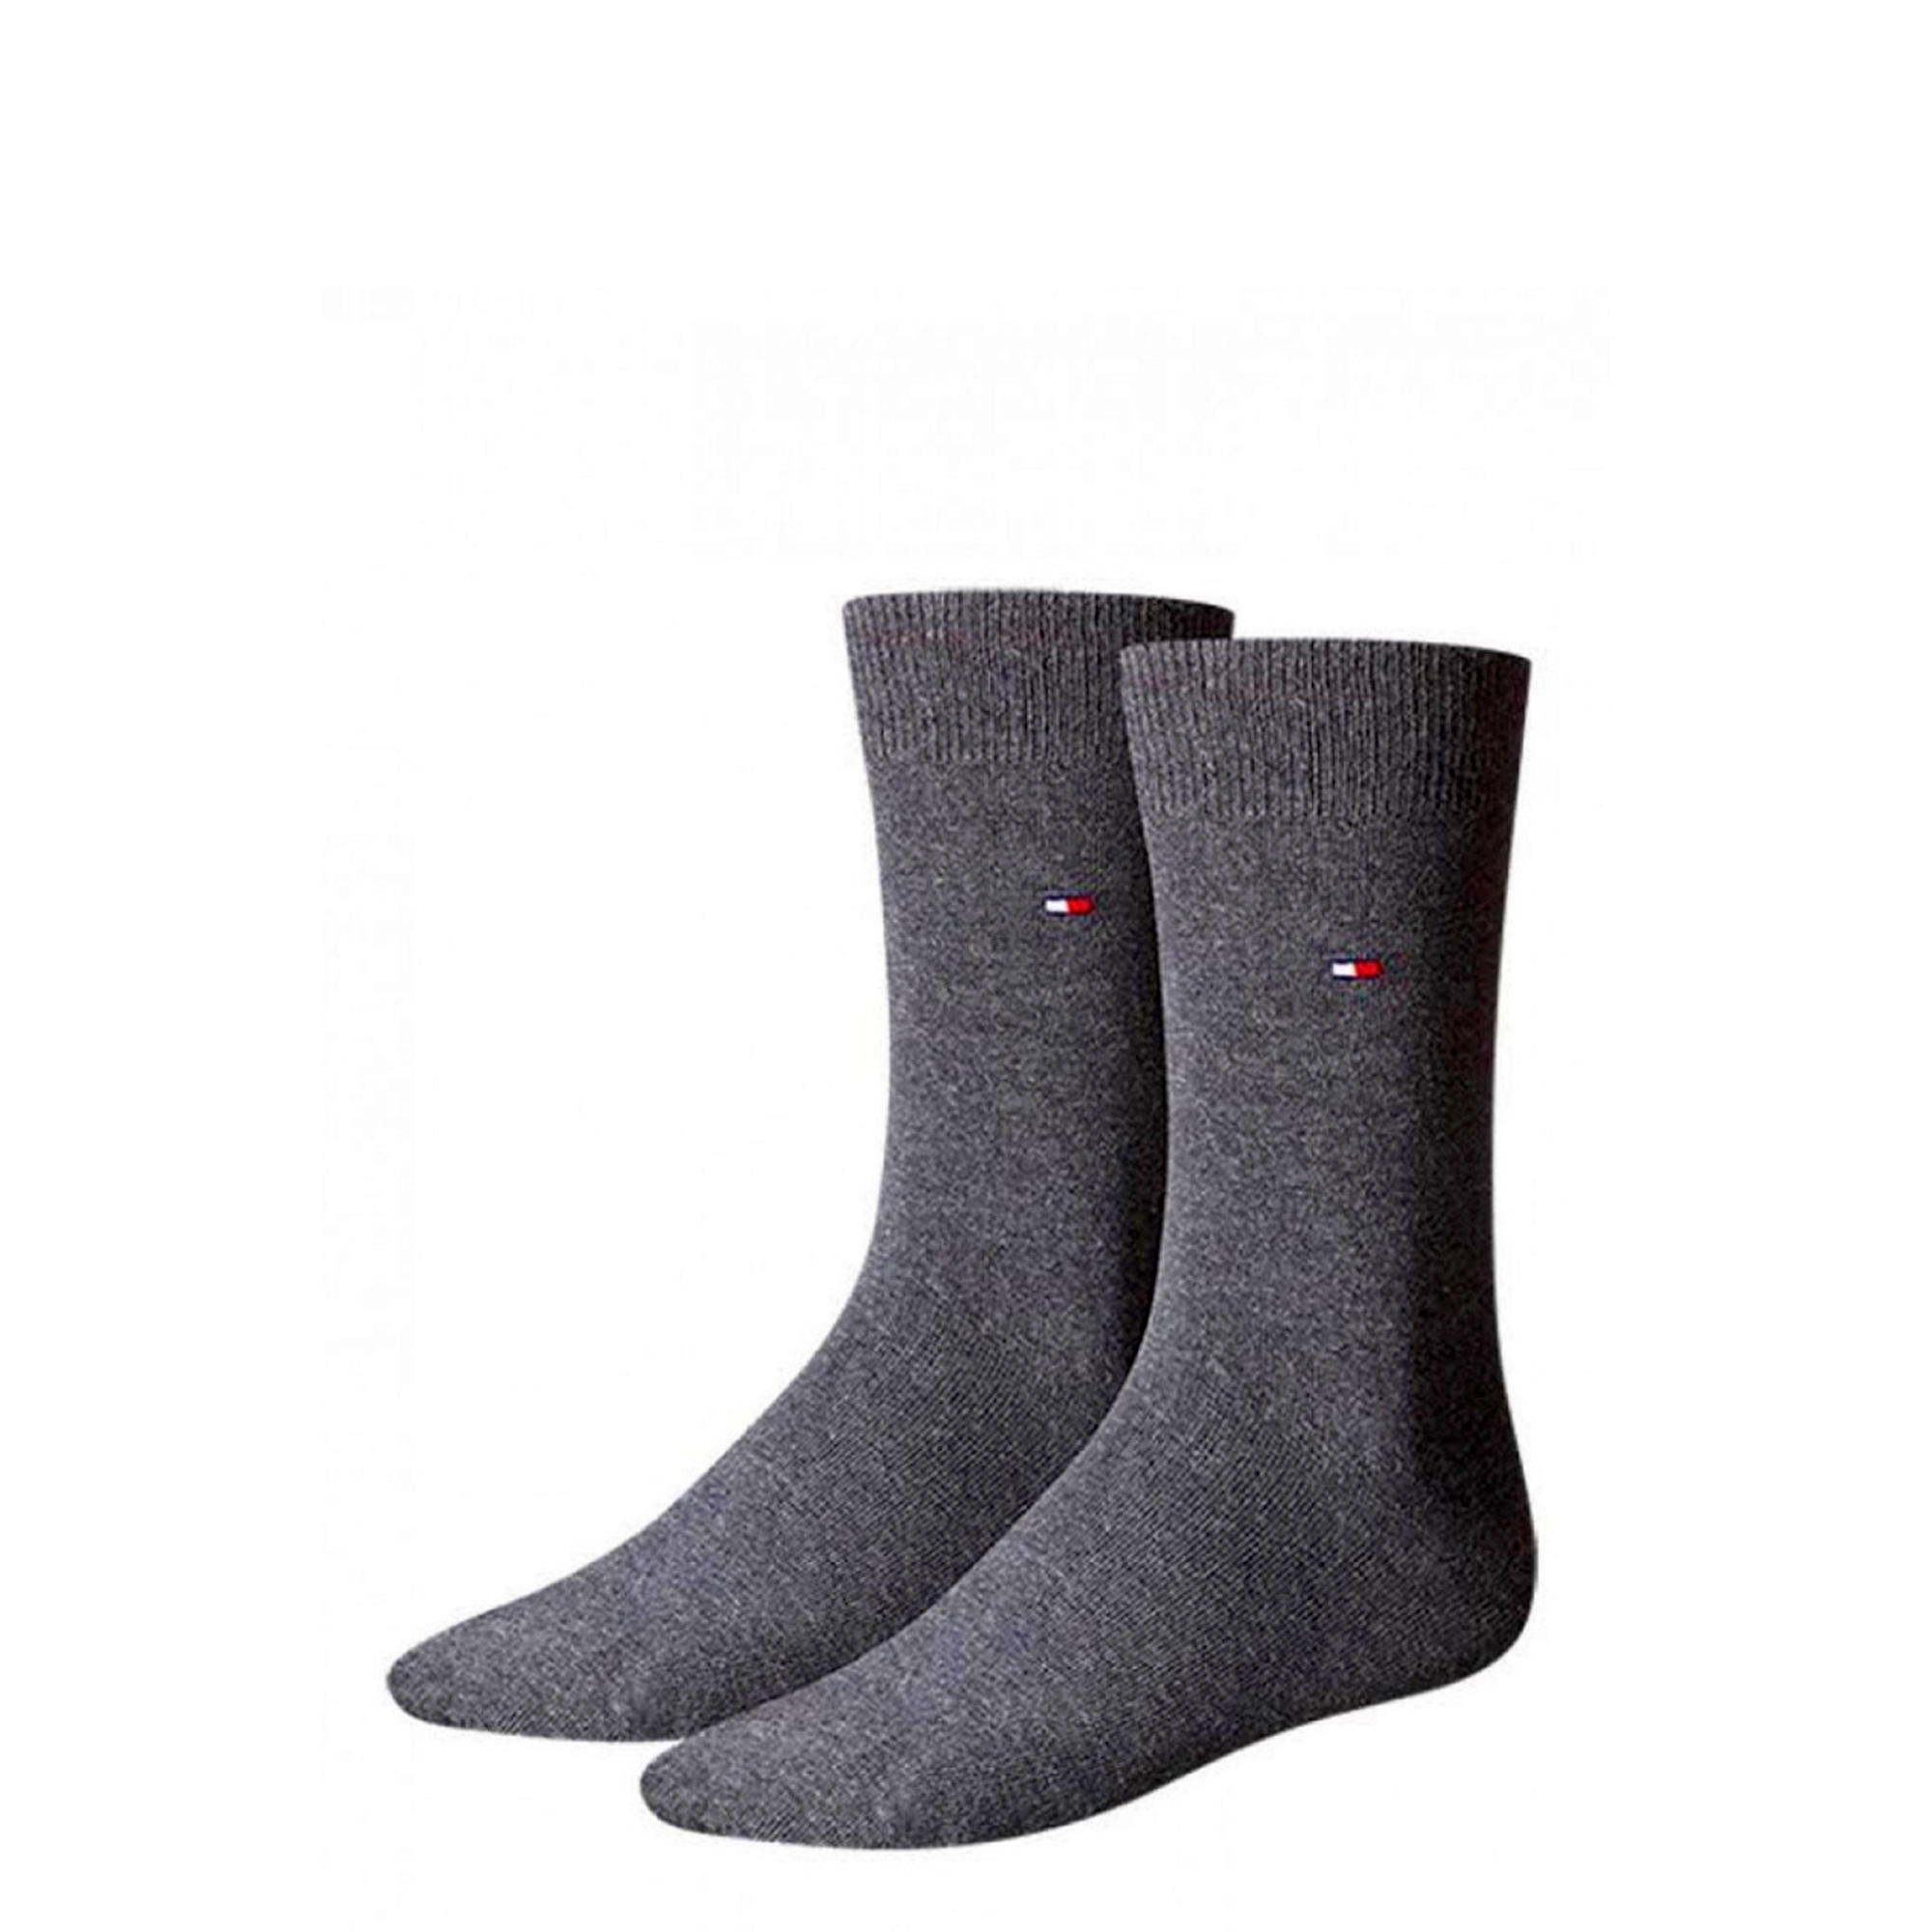 Tommy Hilfiger socks 371111 030 Antracite